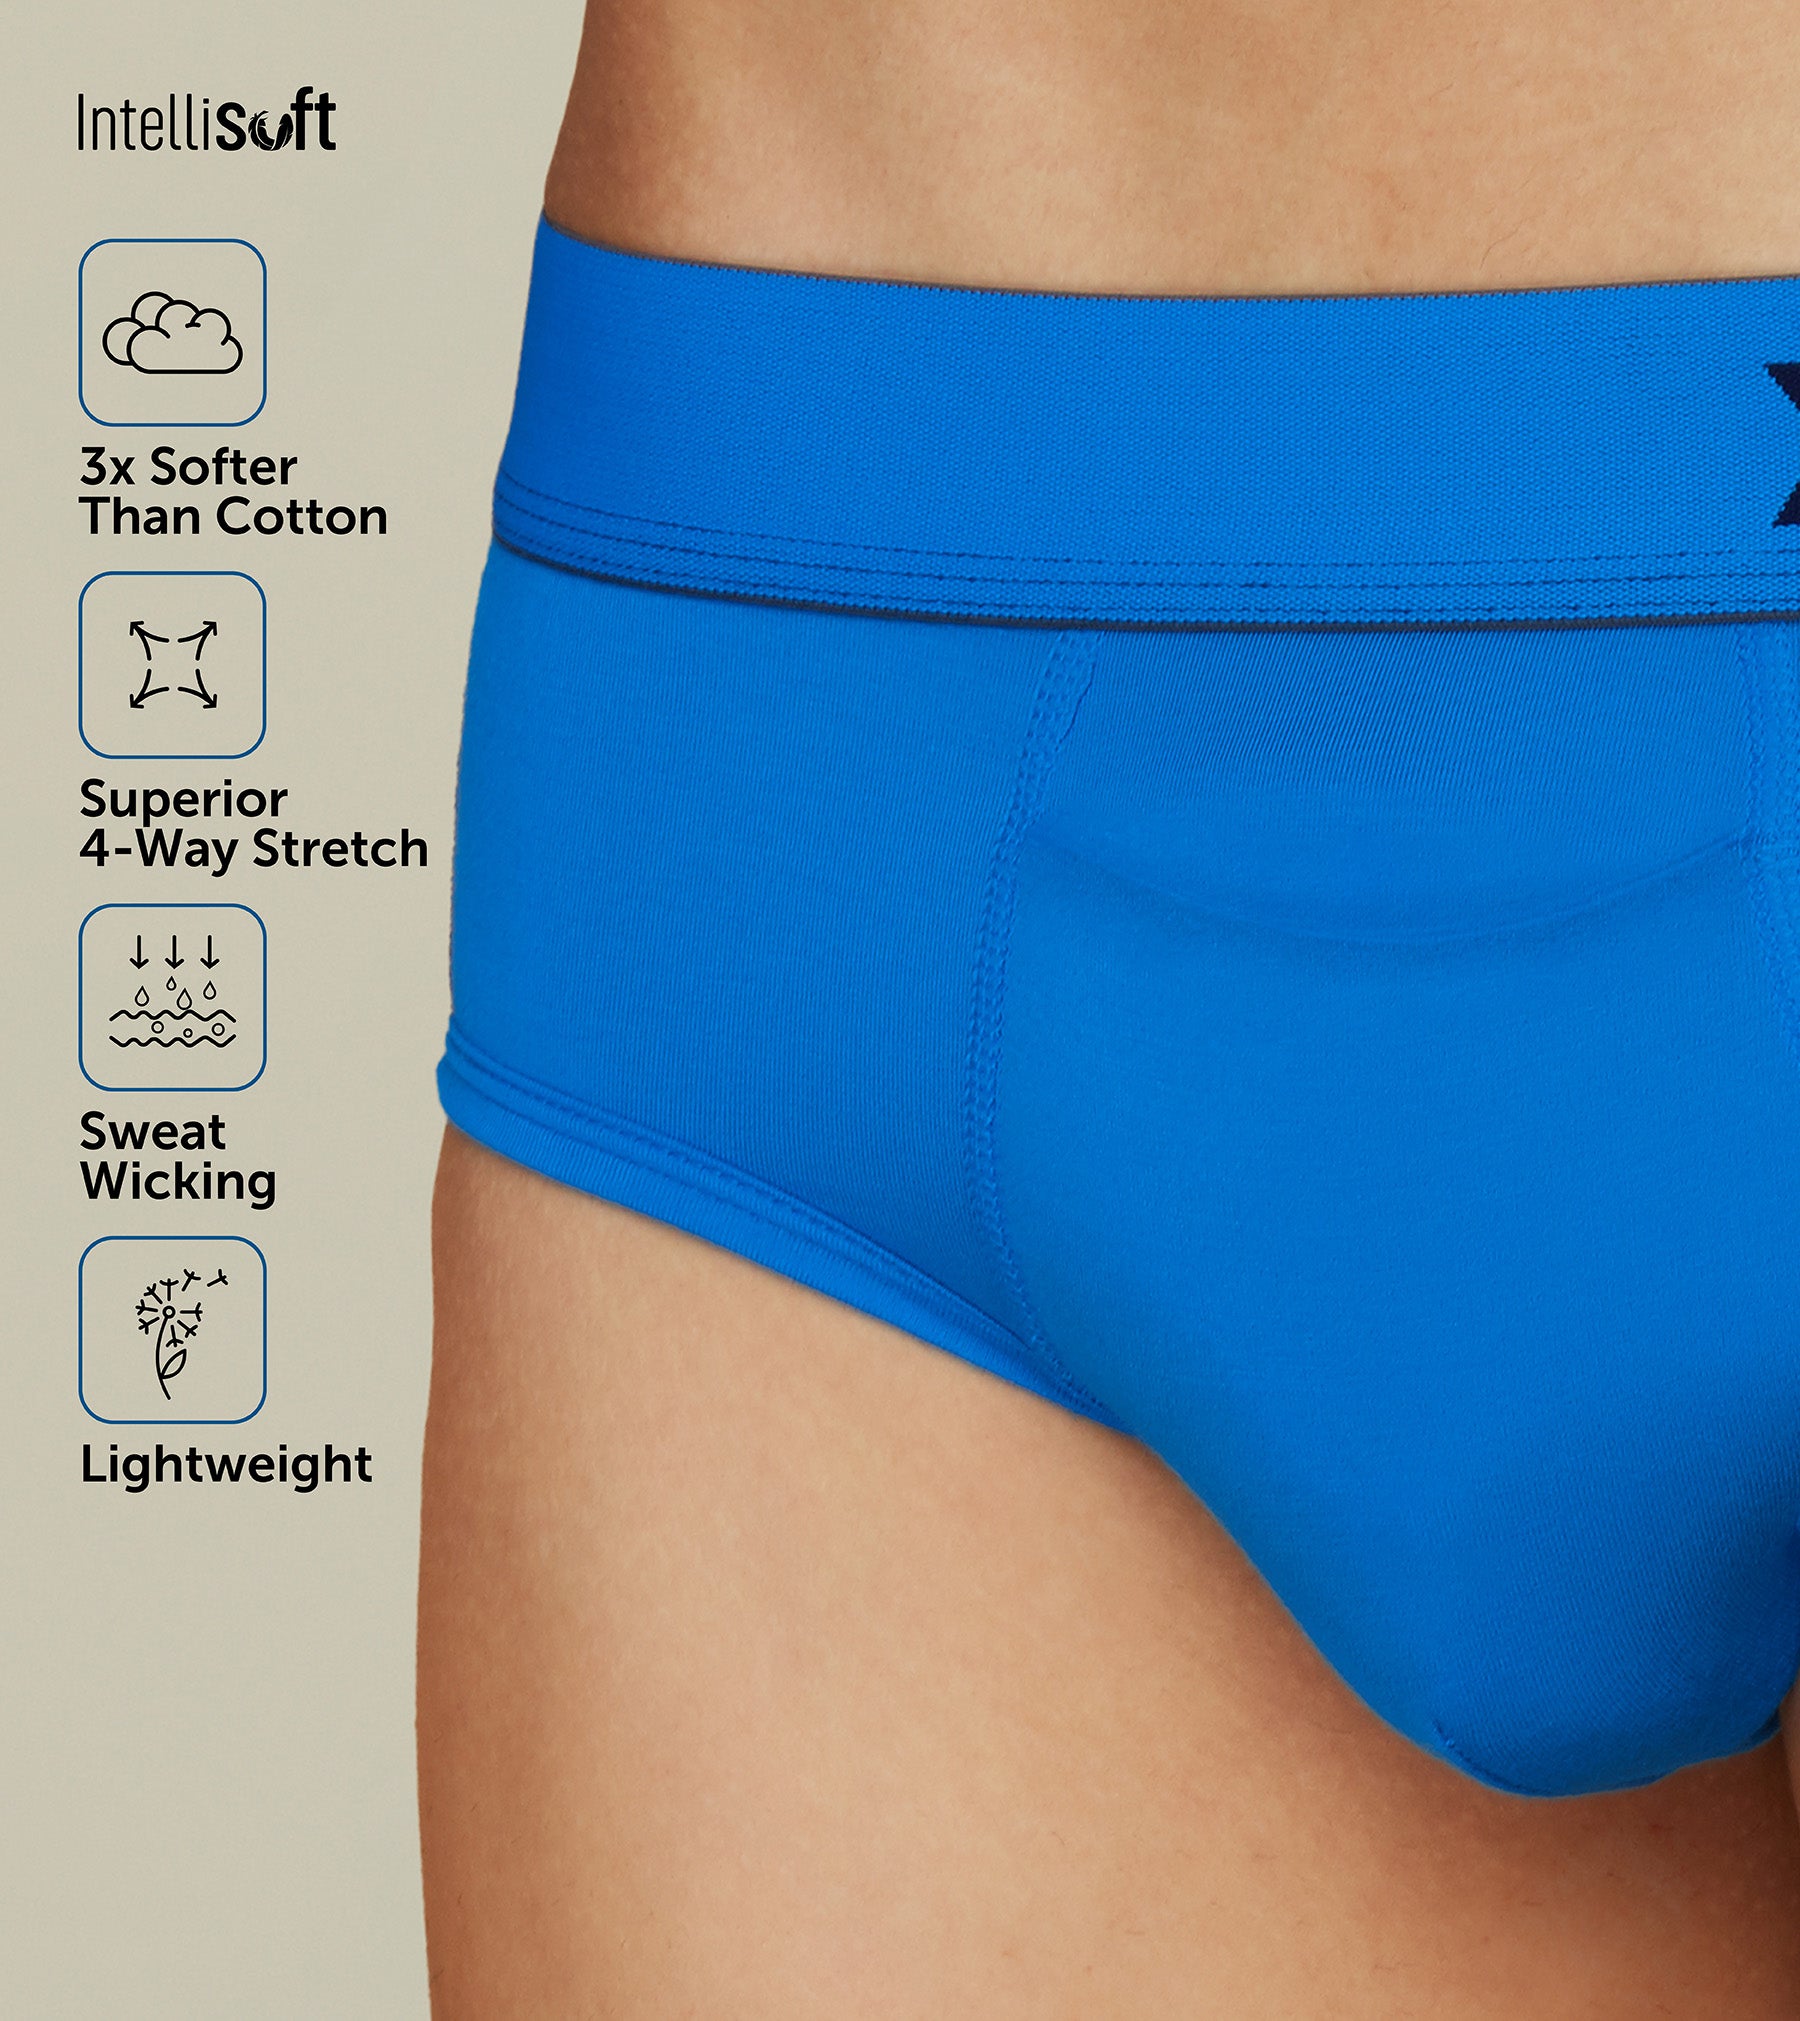 XYXX Men's Underwear Dualist IntelliSoft Antimicrobial Micro Modal Trunk  Pack of 2 (Navigate & Black Iris ;